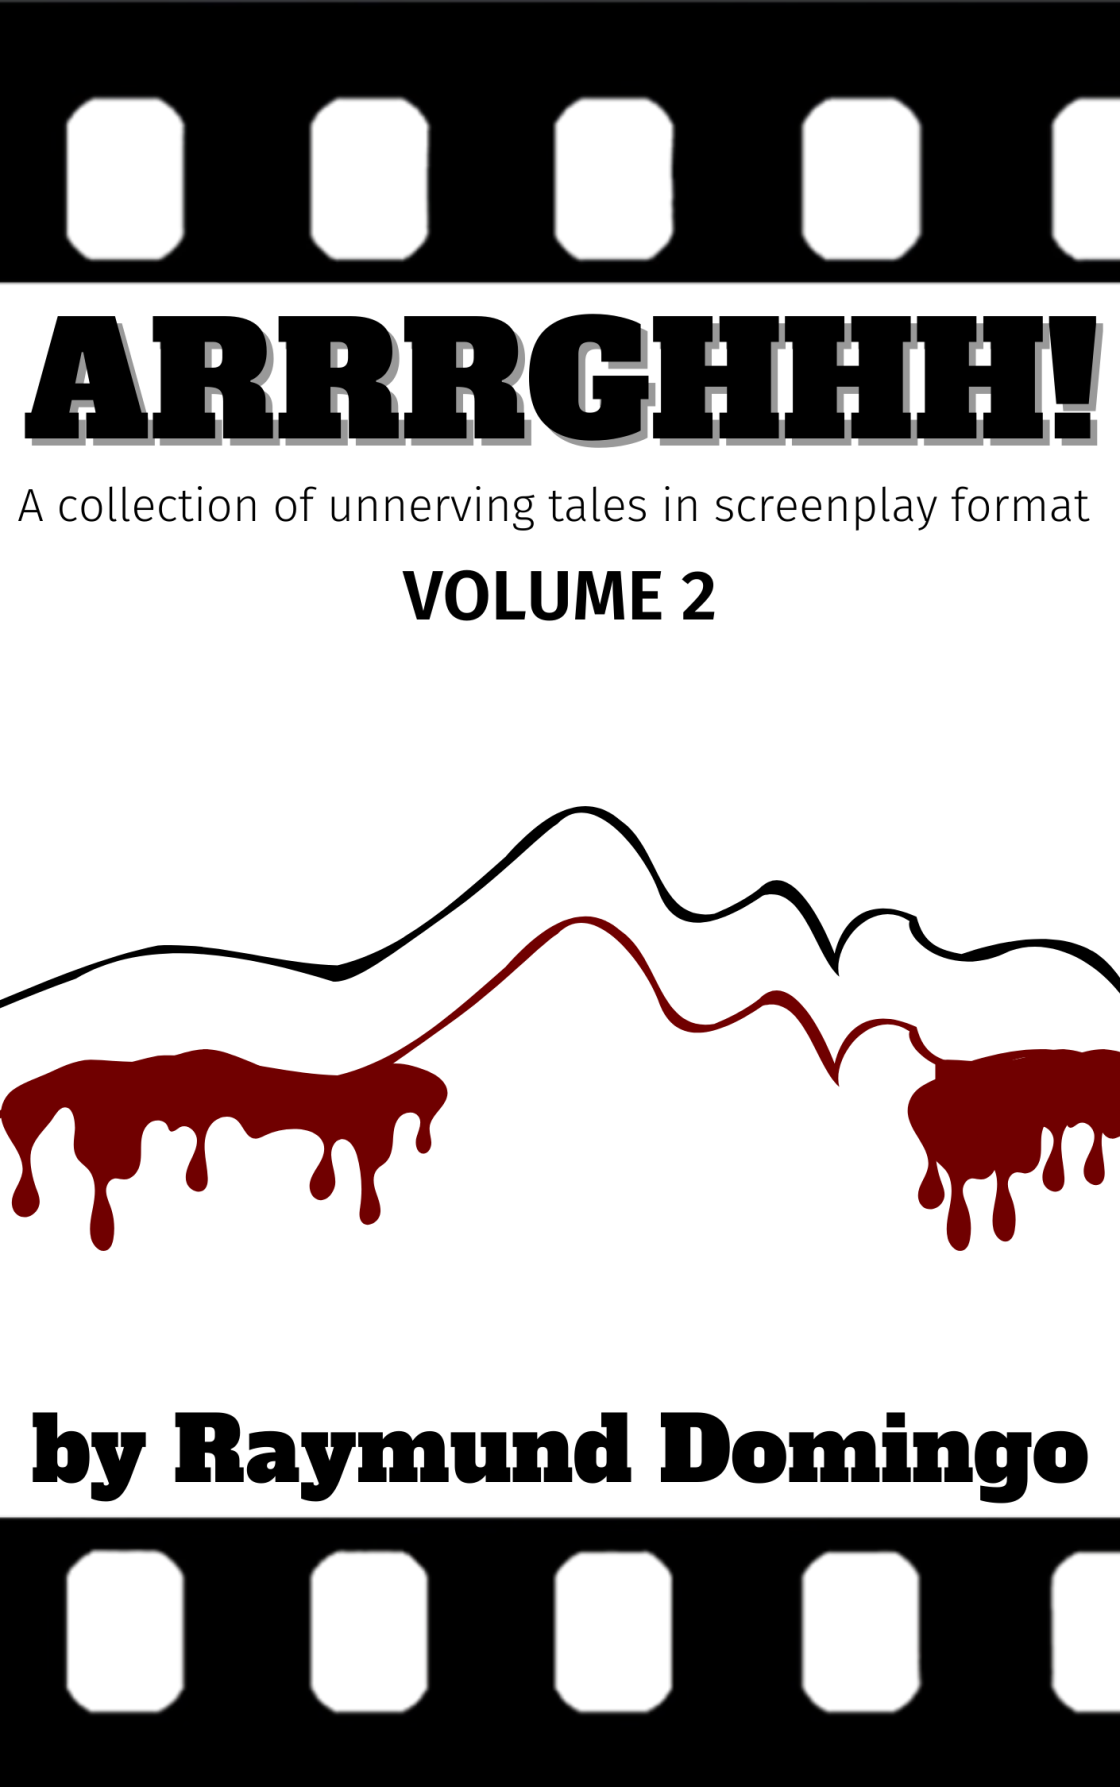 Ebook available now: Arrrghhh! vol. 2